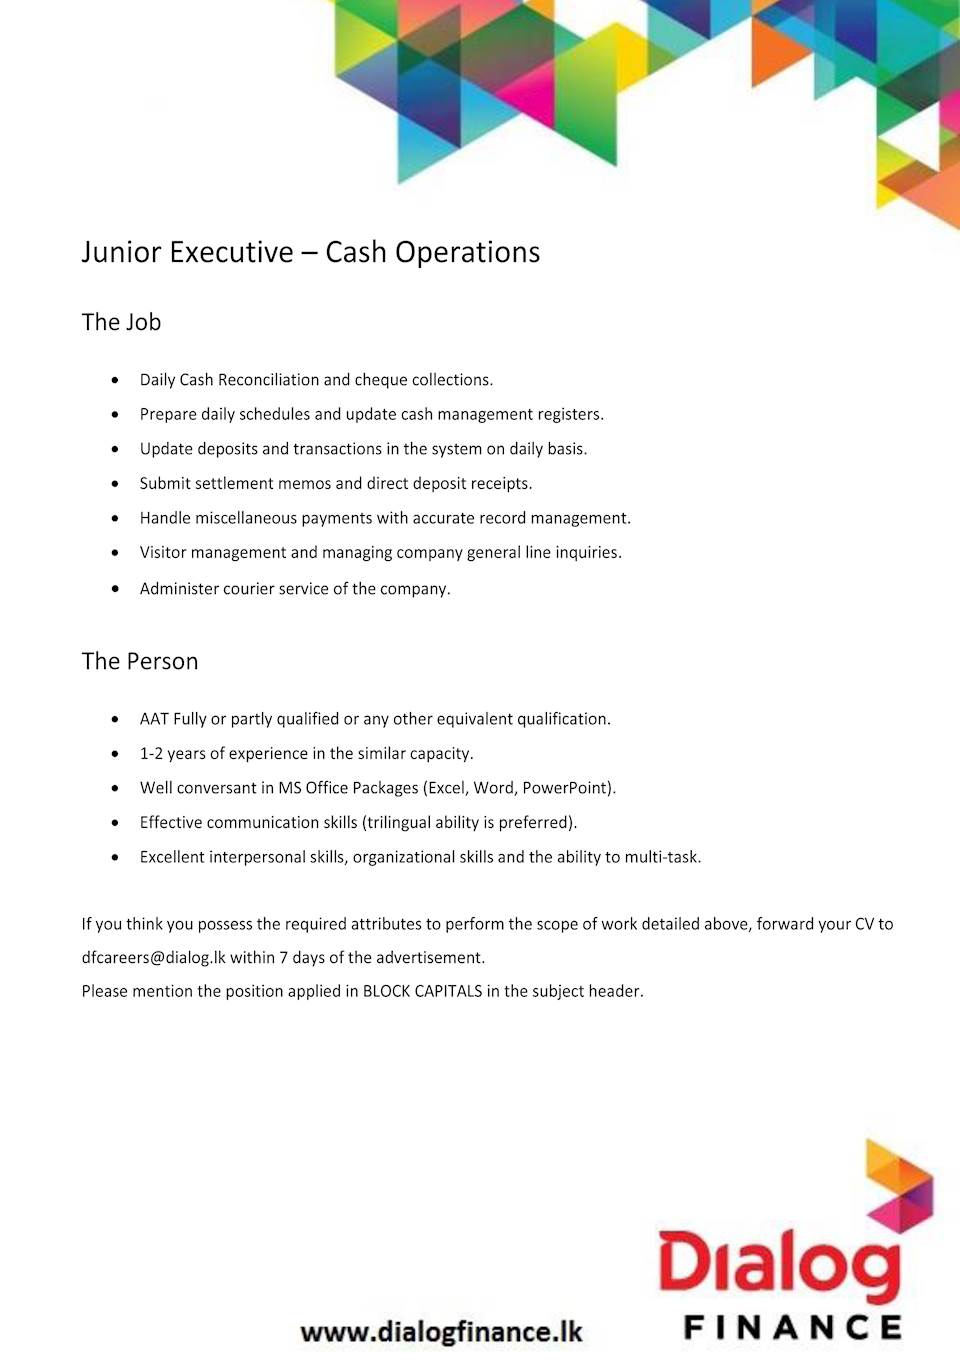 Junior Executive - Cash Operations 